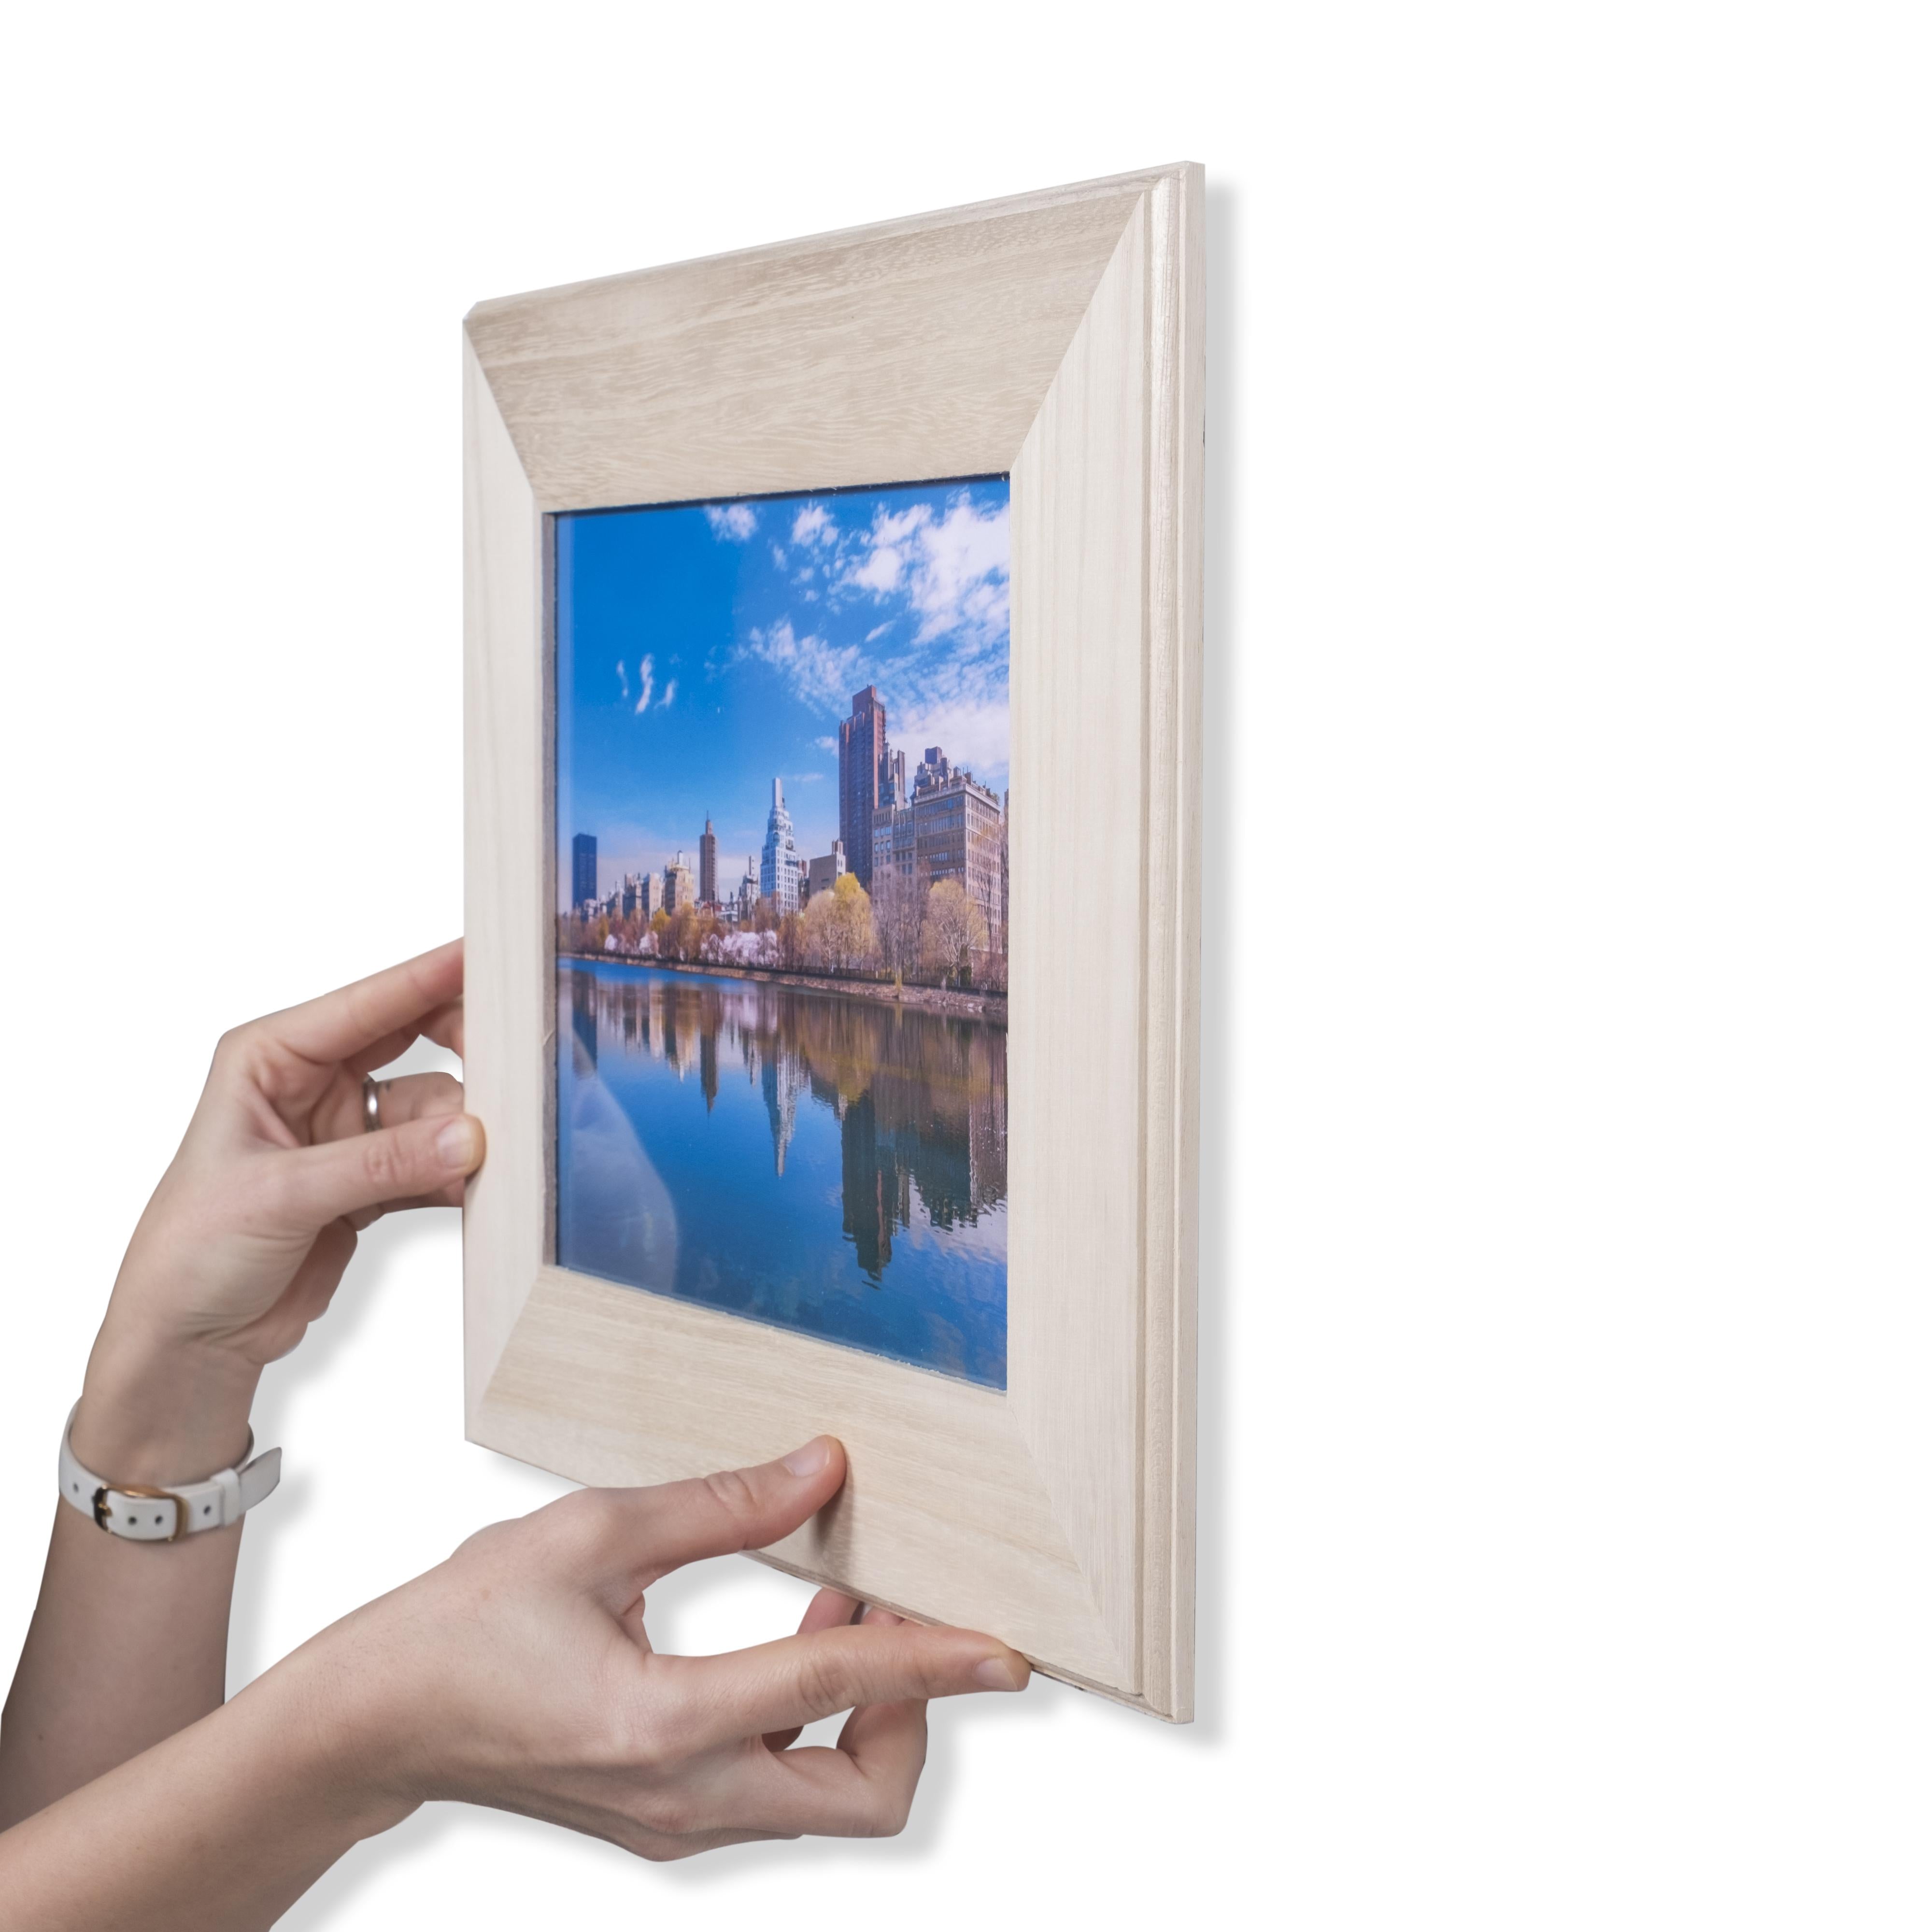 WOODATHENA 8" x 10" Unpainted Wooden Picture Frames - Set of 3 - Wallniture